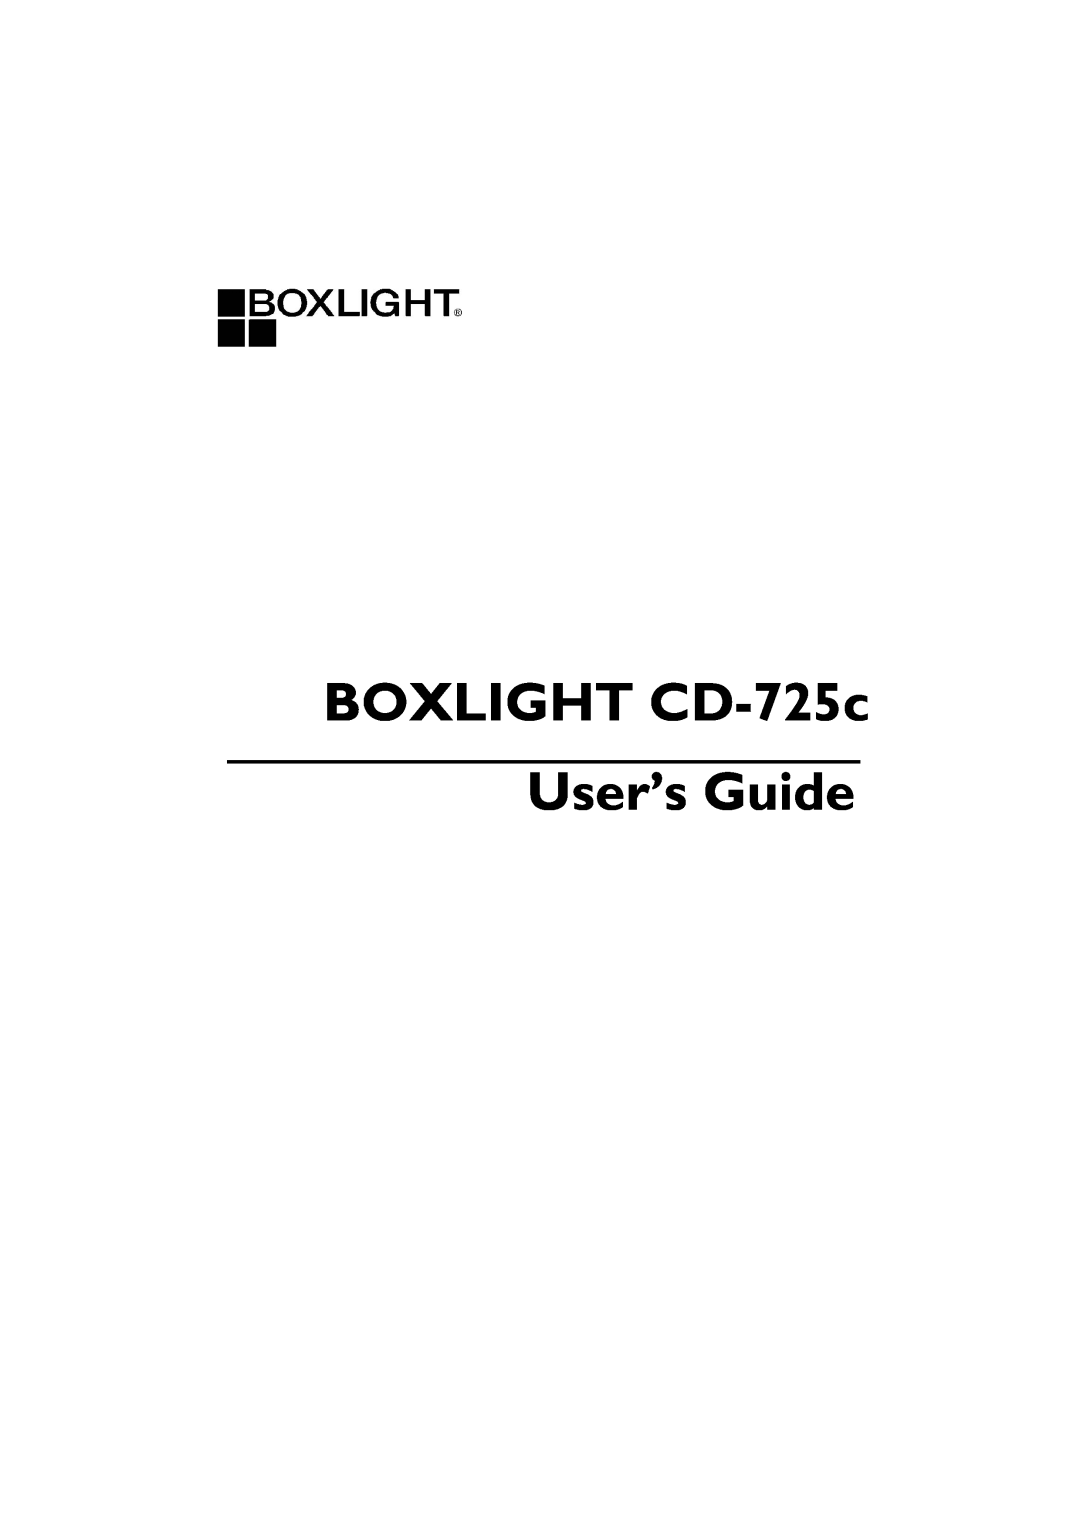 BOXLIGHT manual BOXLIGHT CD-725c User’s Guide 